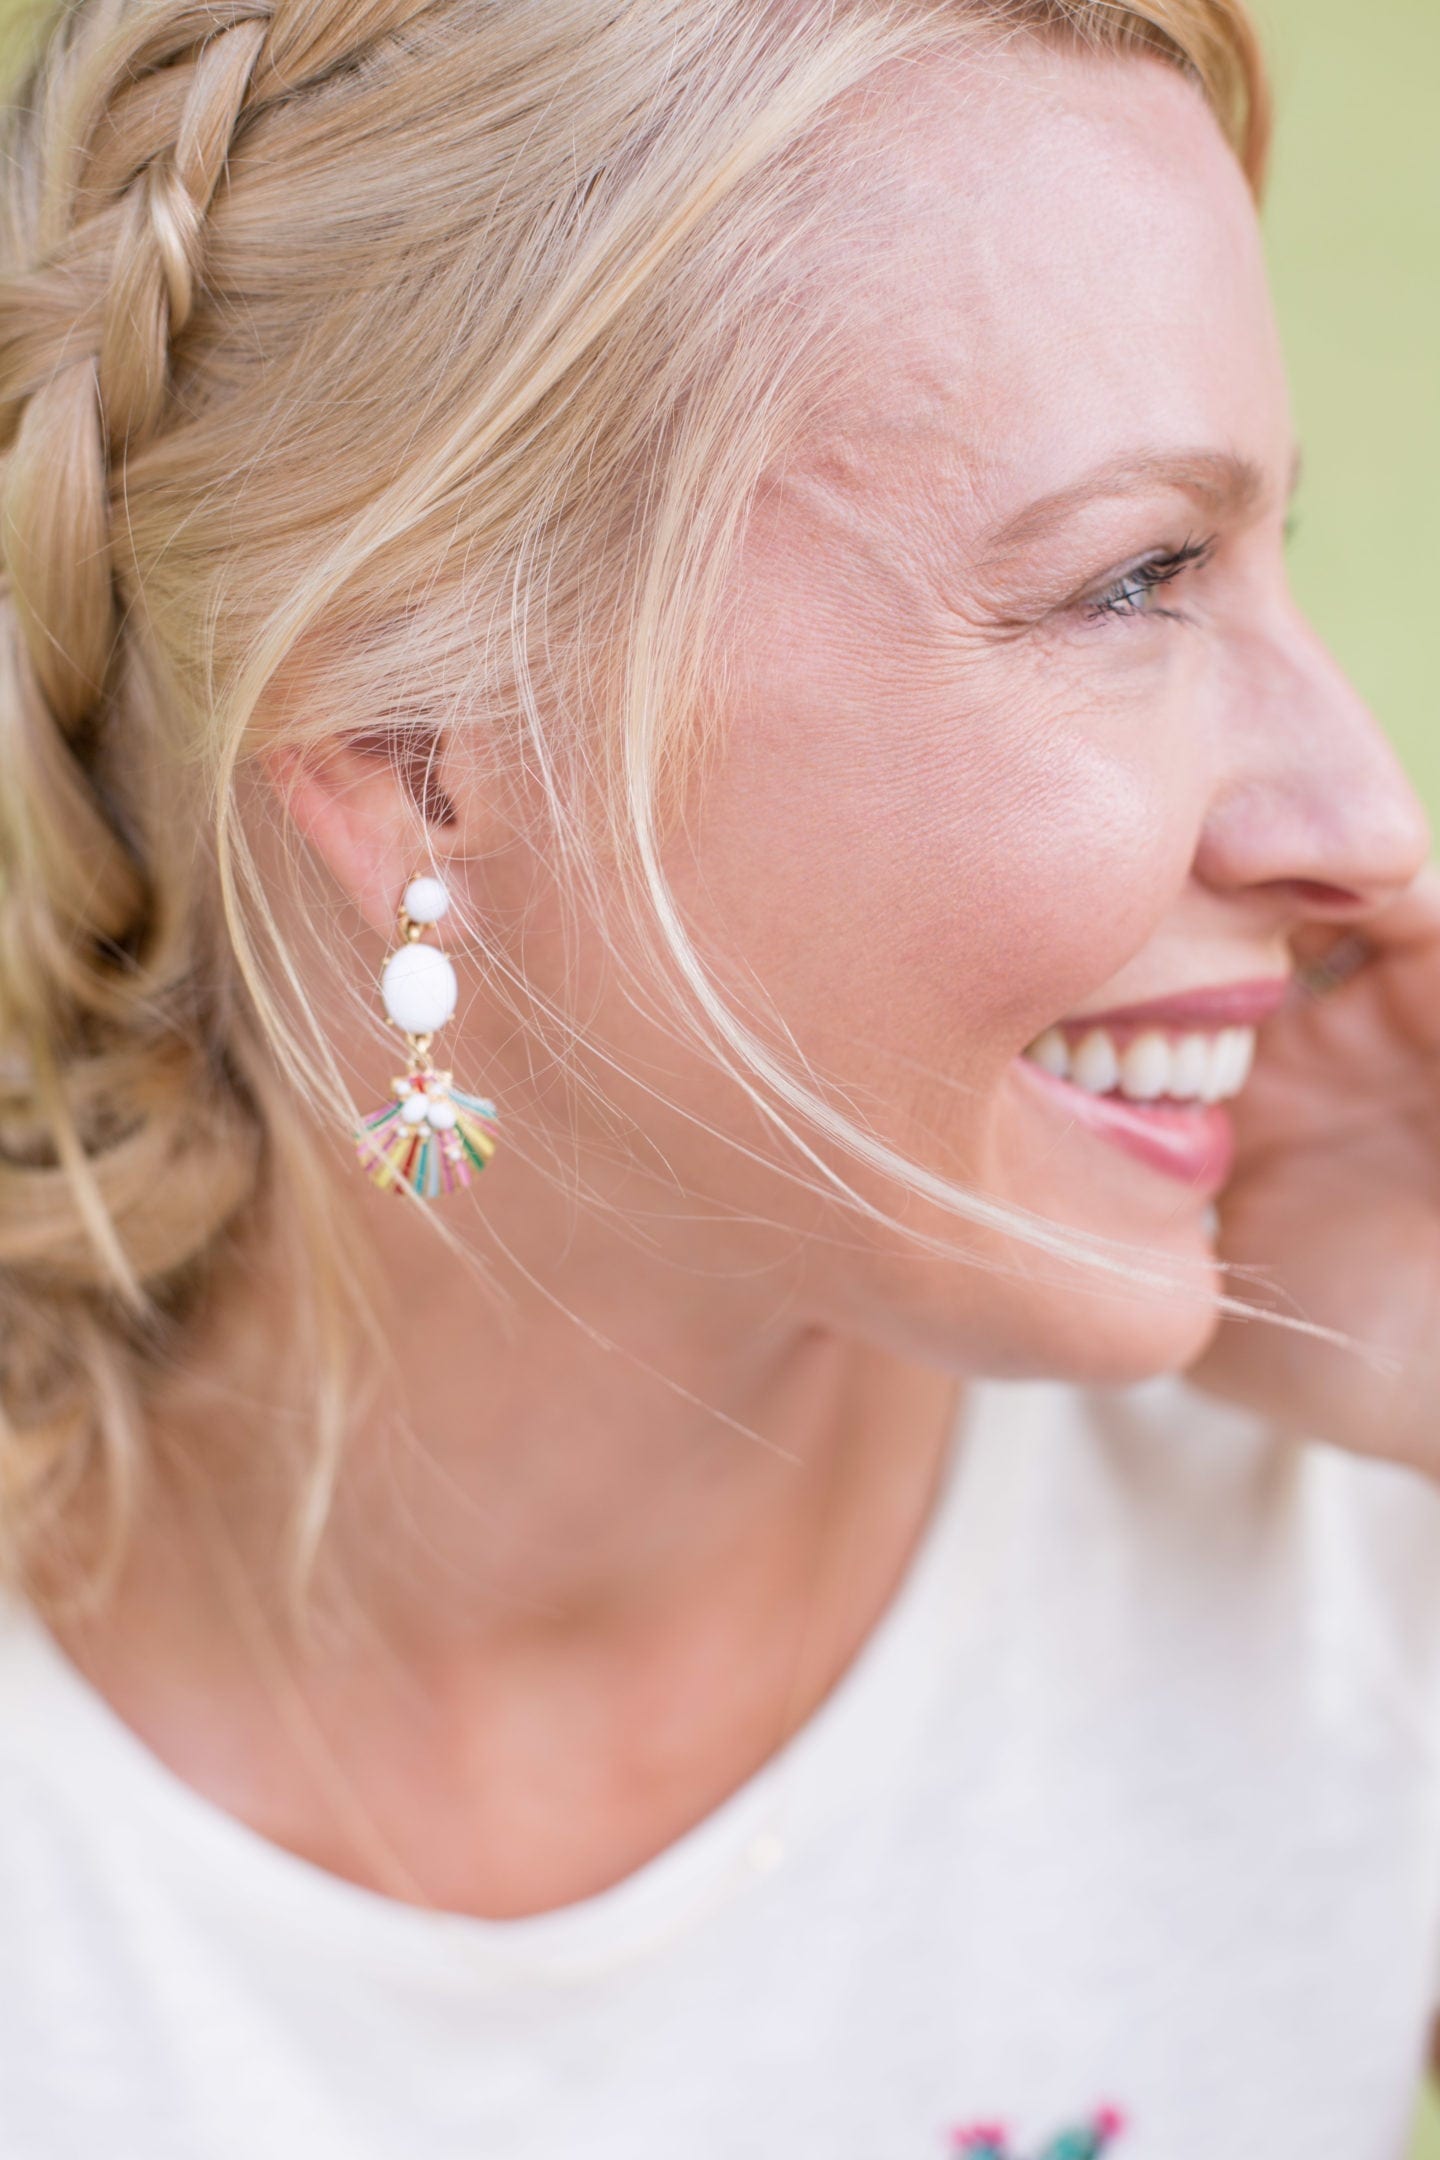 Summer earrings in white and shell design